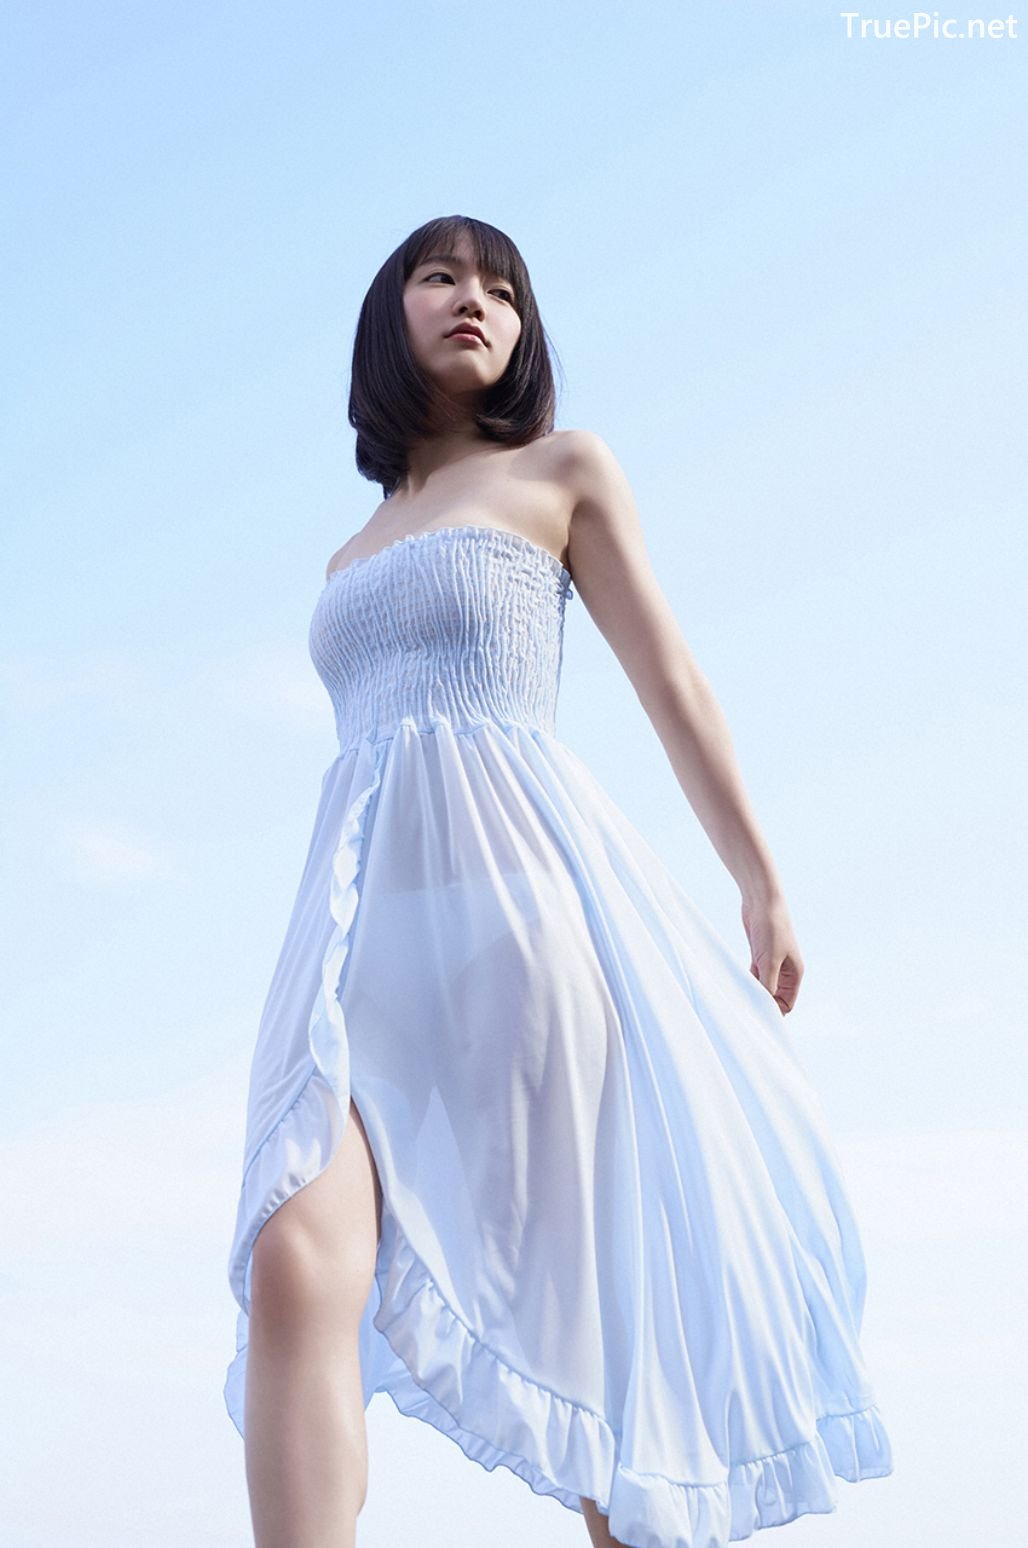 Image-Japanese-Actress-And-Model-Riho-Yoshioka-Pure-Beauty-Of-Sea-Goddess-TruePic.net- Picture-103